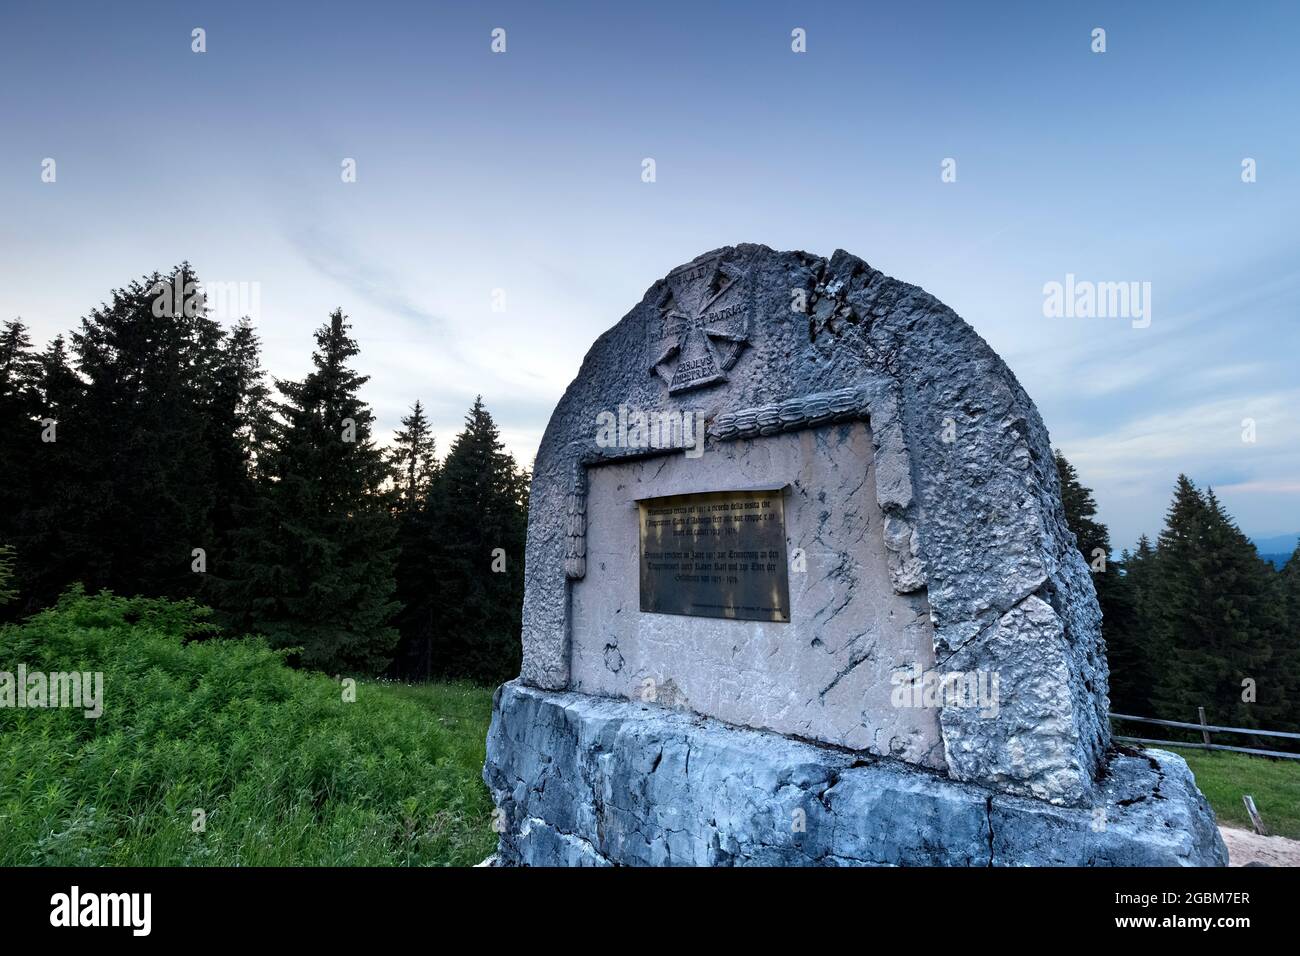 Memorial stone of the Great War. Fiorentini plateau, Arsiero, Vicenza province, Veneto, Italy, Europe. Stock Photo